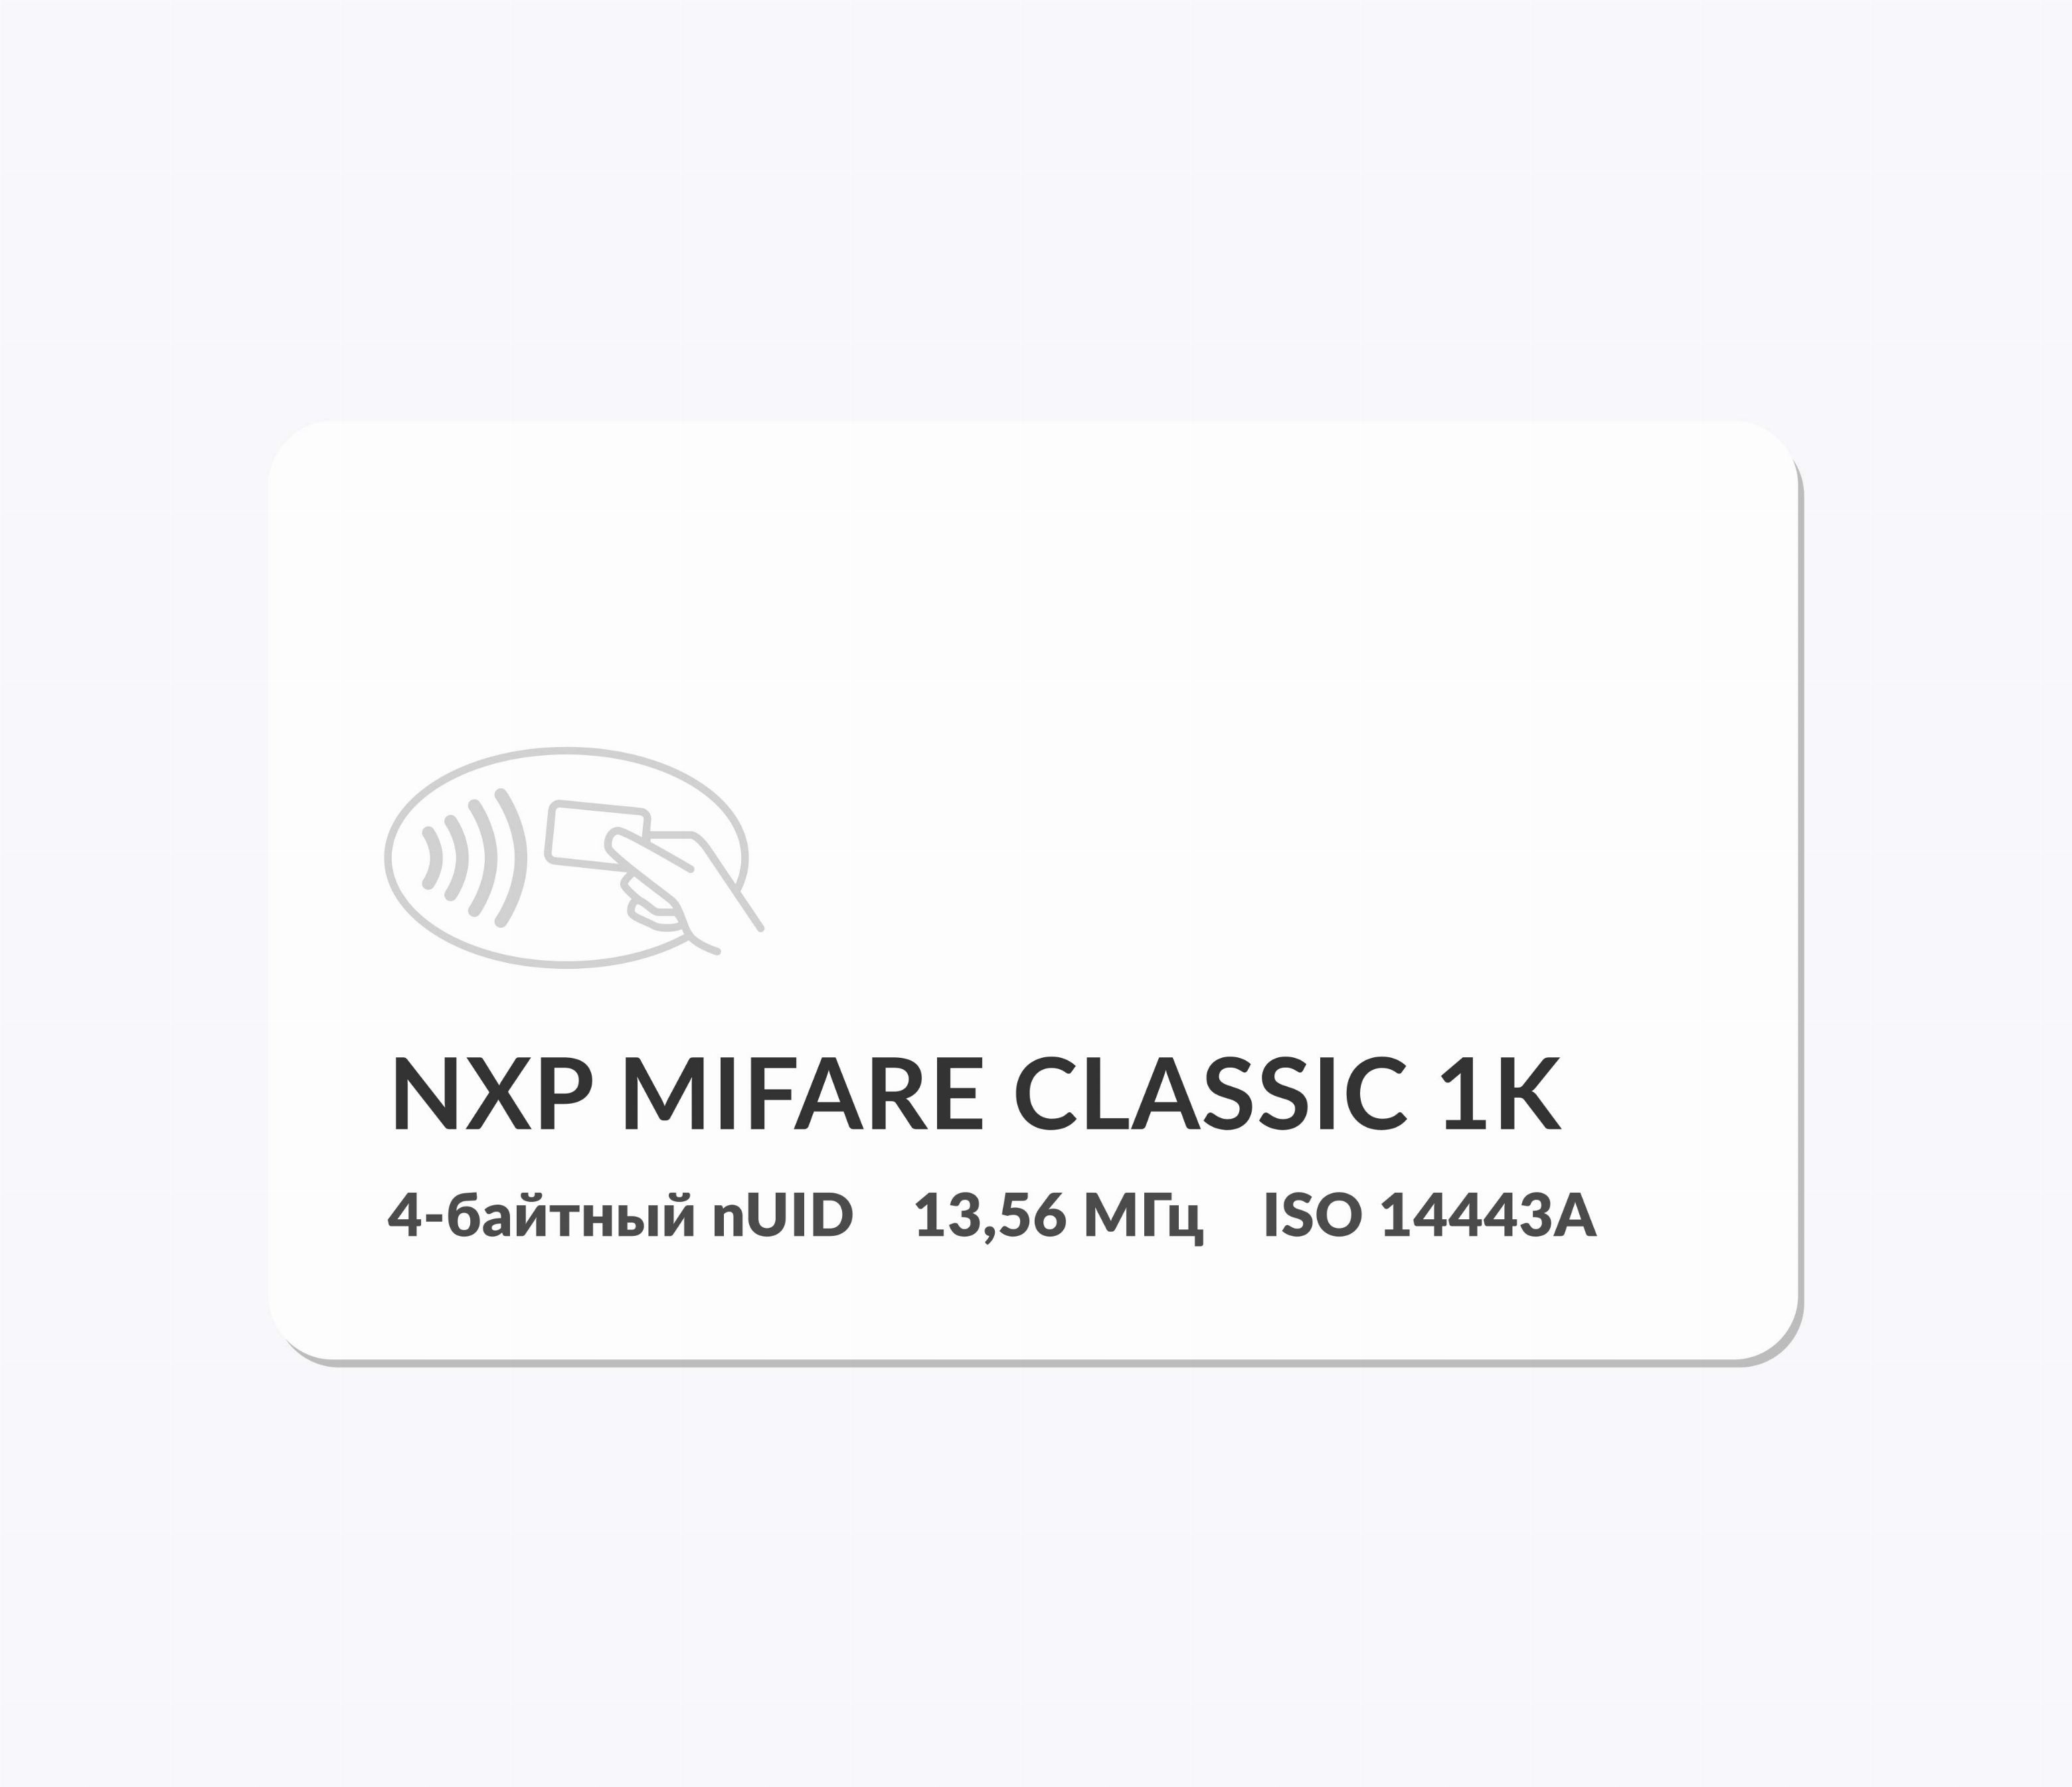 RFID-карты с чипом NXP MIFARE Classic 1k 4 byte nUID RFID-карты с чипом NXP MIFARE Classic 1k 4 byte nUID